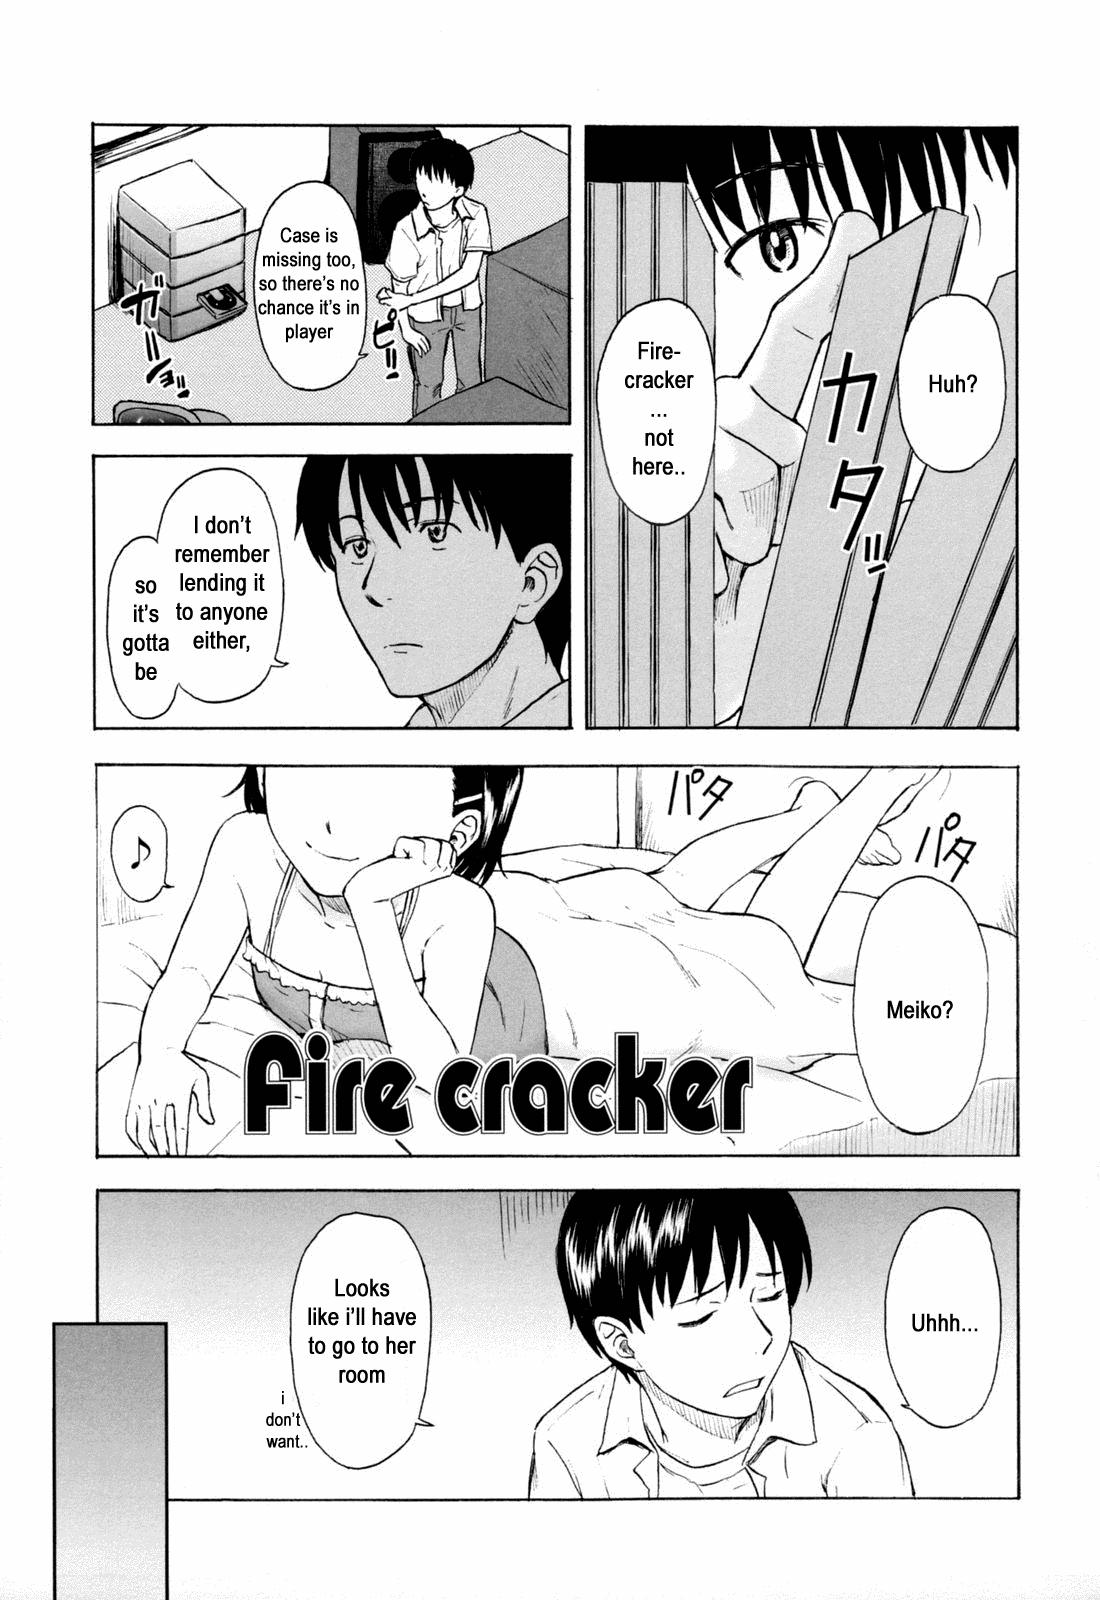 FirecrackerEnglish translation 1